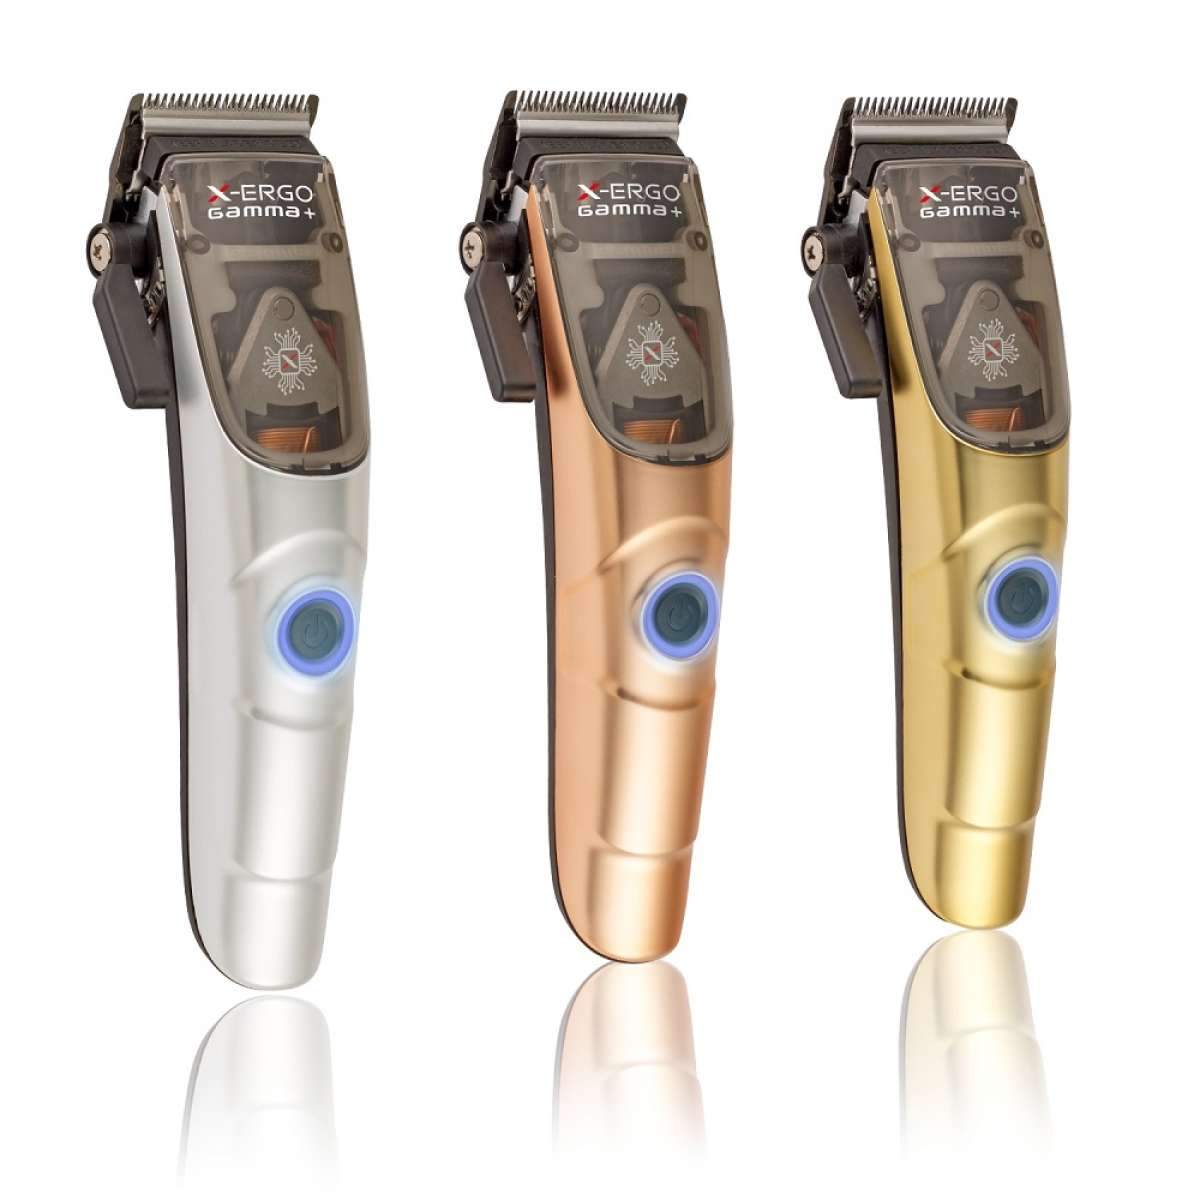 New GAMMA X ERGO hair Clipper professional cordless clipper (silver, gold, rose gold) 0850014553975 HCGPXERGOMS